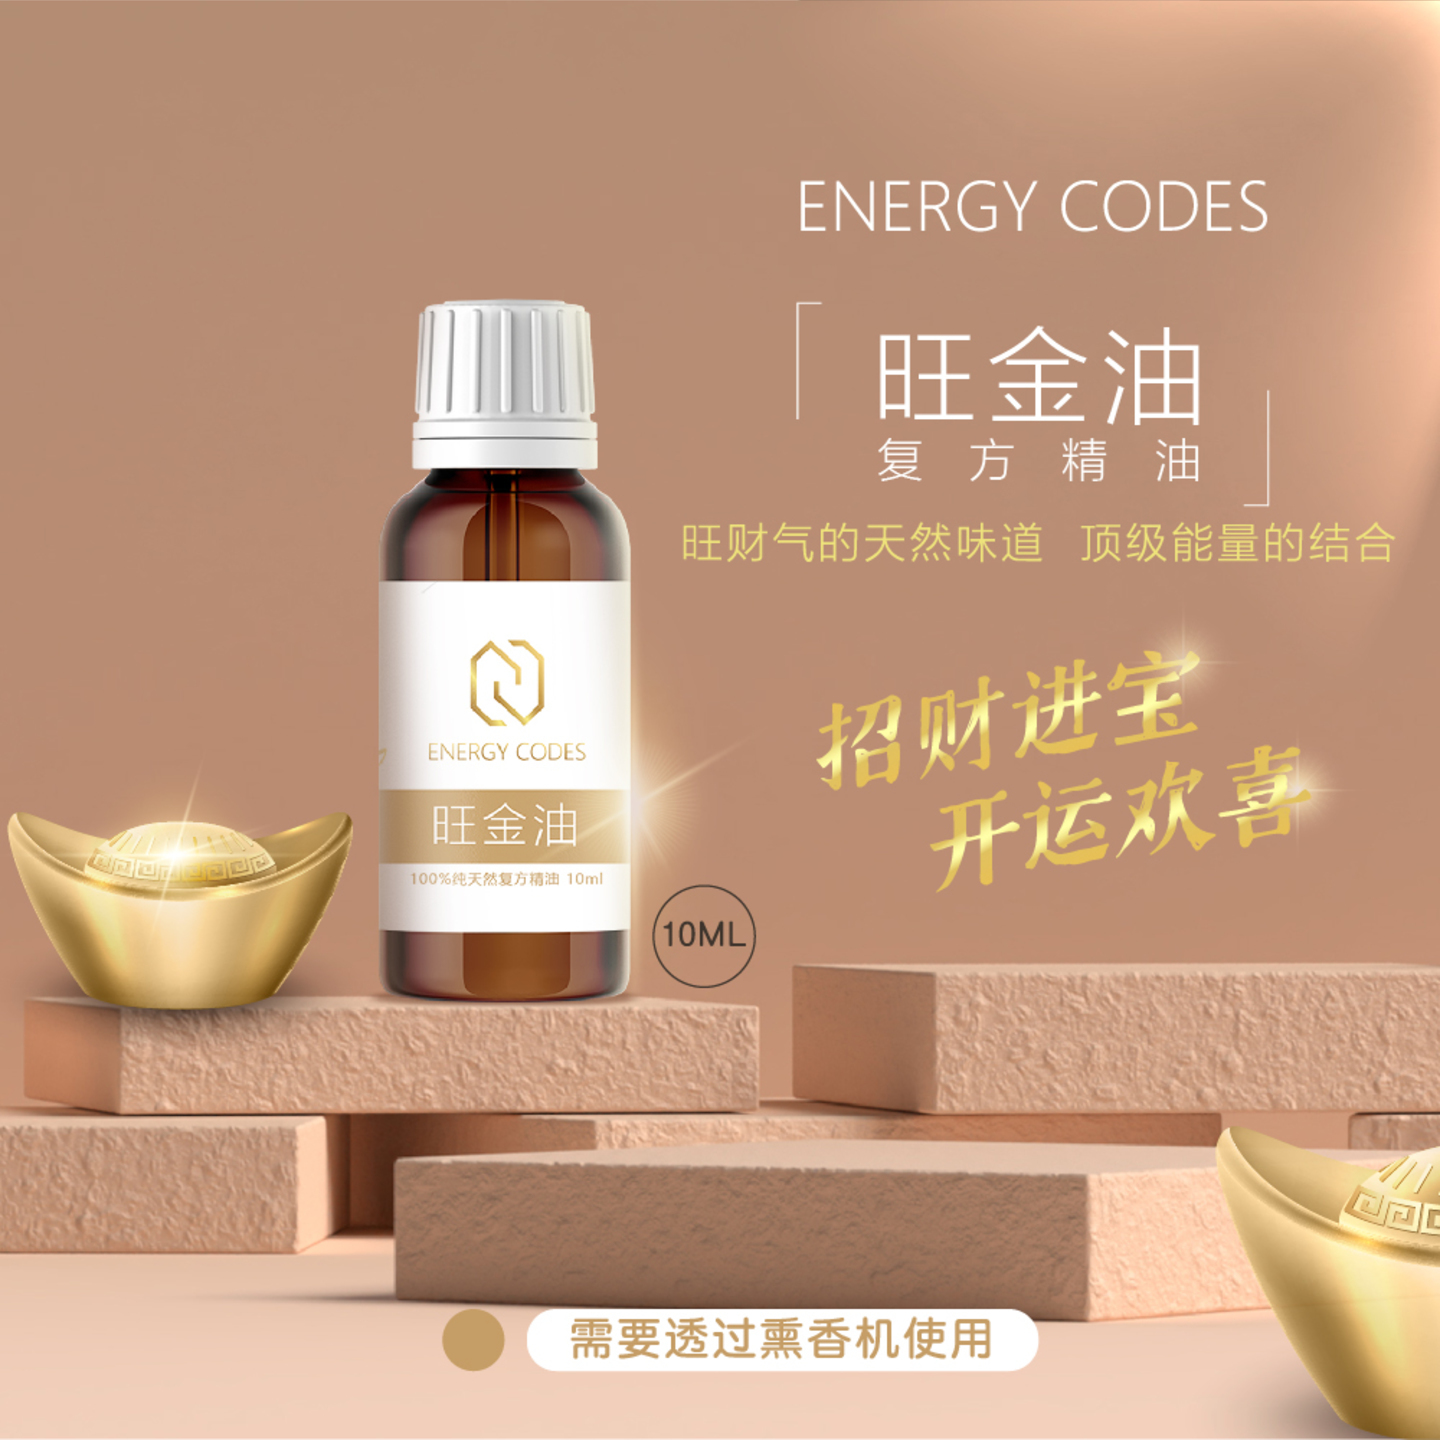 EC0025 旺金油 复方纯精油 10ml             Wang Jin You Essential Oil 10ML